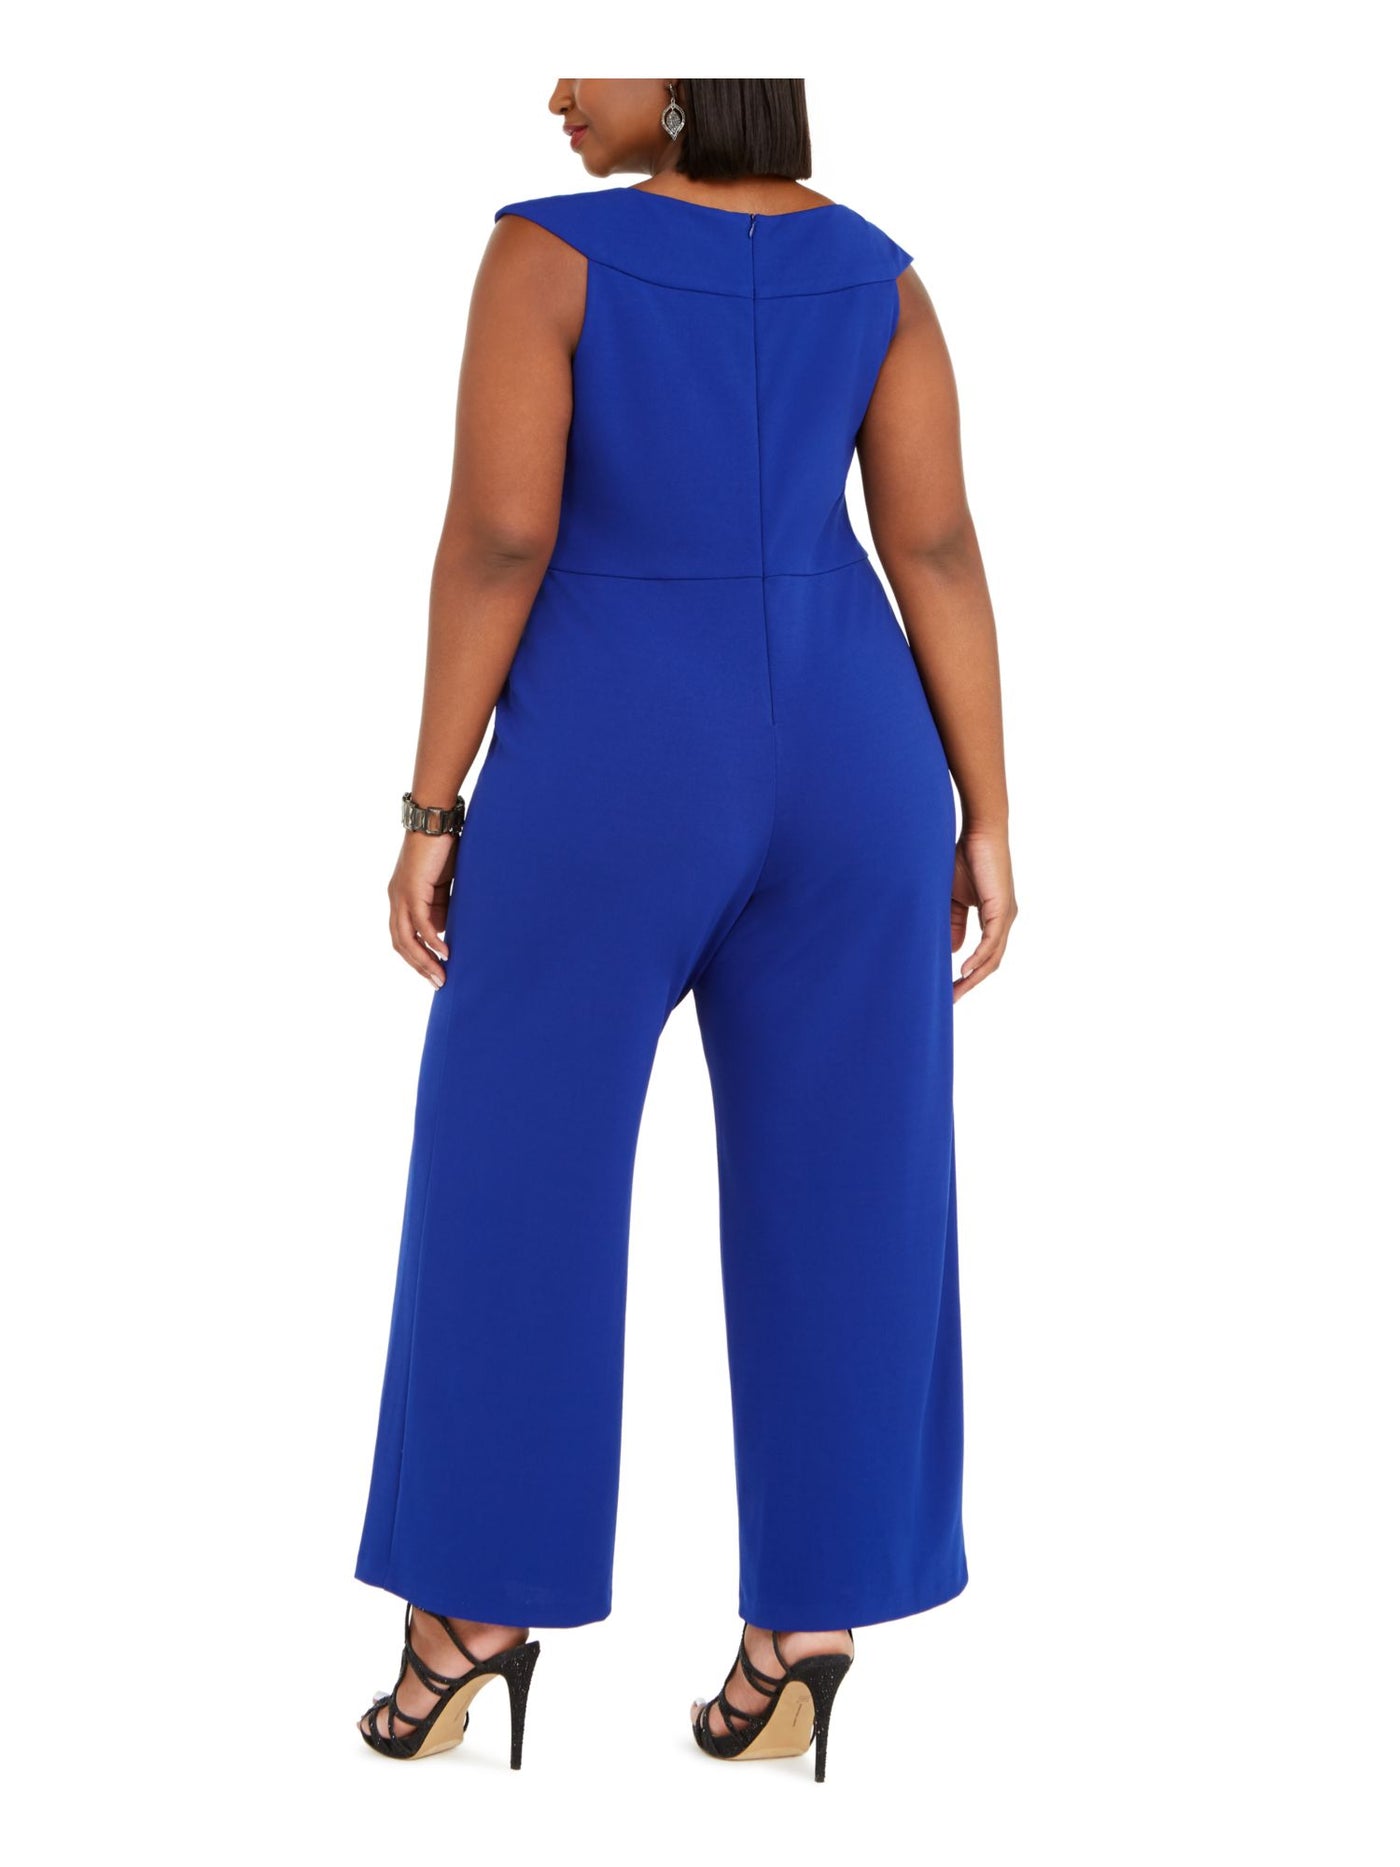 CONNECTED APPAREL Womens Blue Cap Sleeve Jewel Neck Evening Wide Leg Jumpsuit Plus 20W